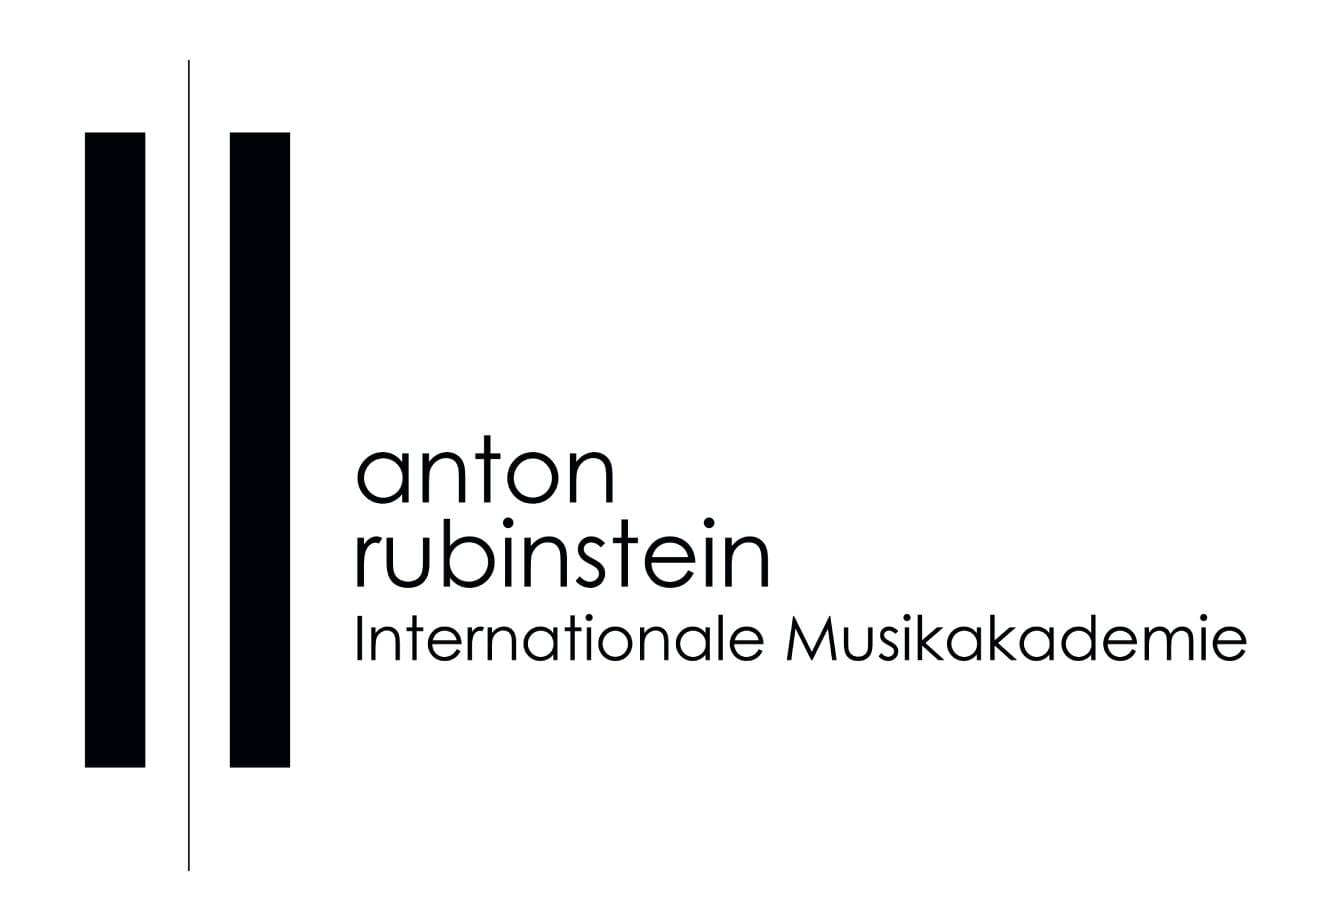 Internationale Musikakademie Anton Rubinstein